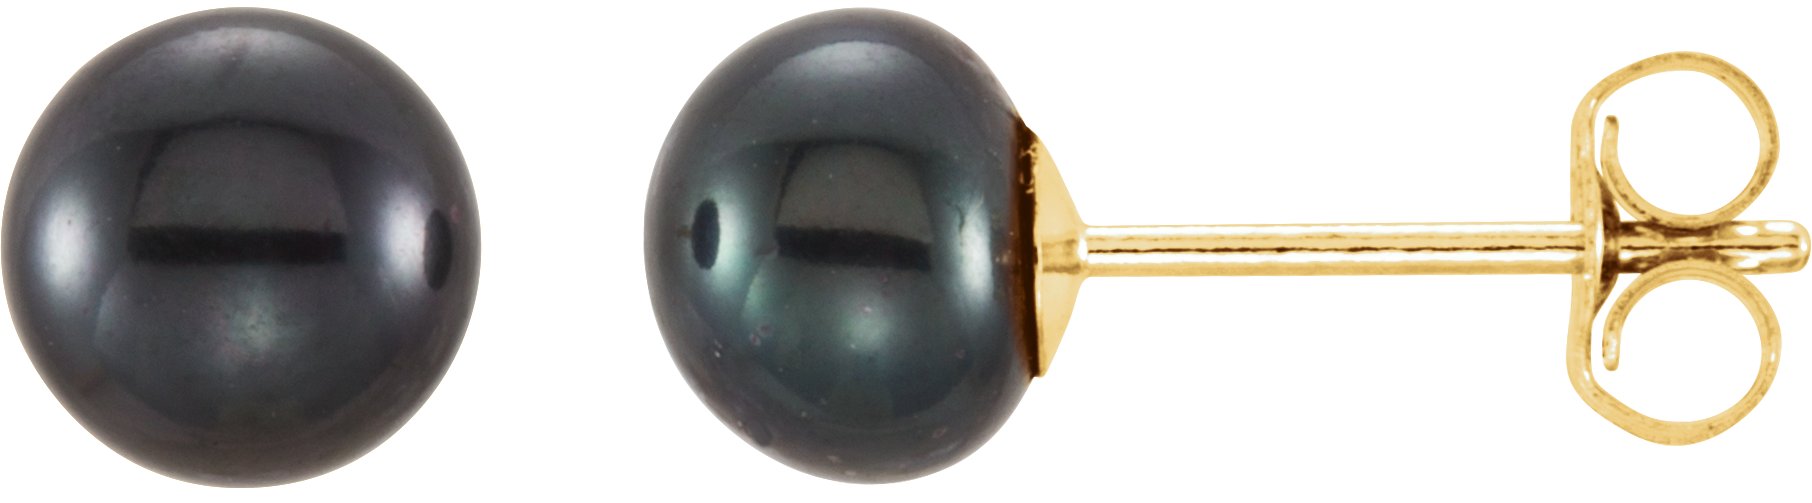 14K Yellow 5 6 mm Black Freshwater Cultured Pearl Earrings Ref. 9995153